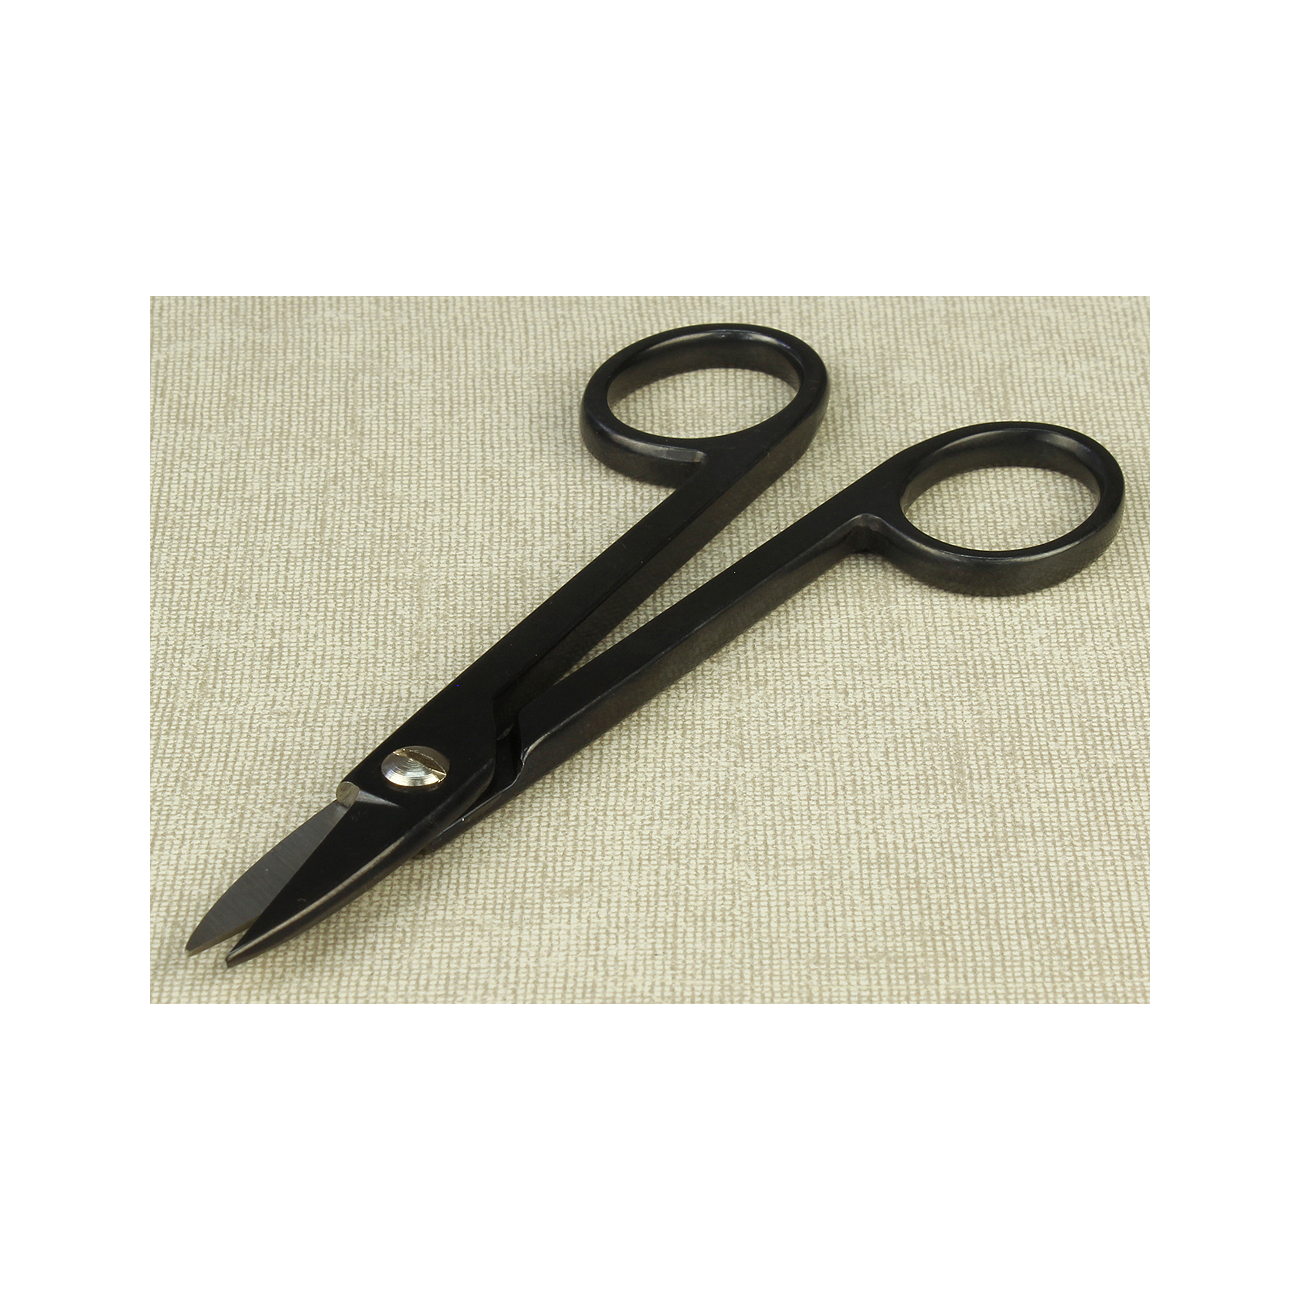 Japanese mire wire cutter scissors 120 mm